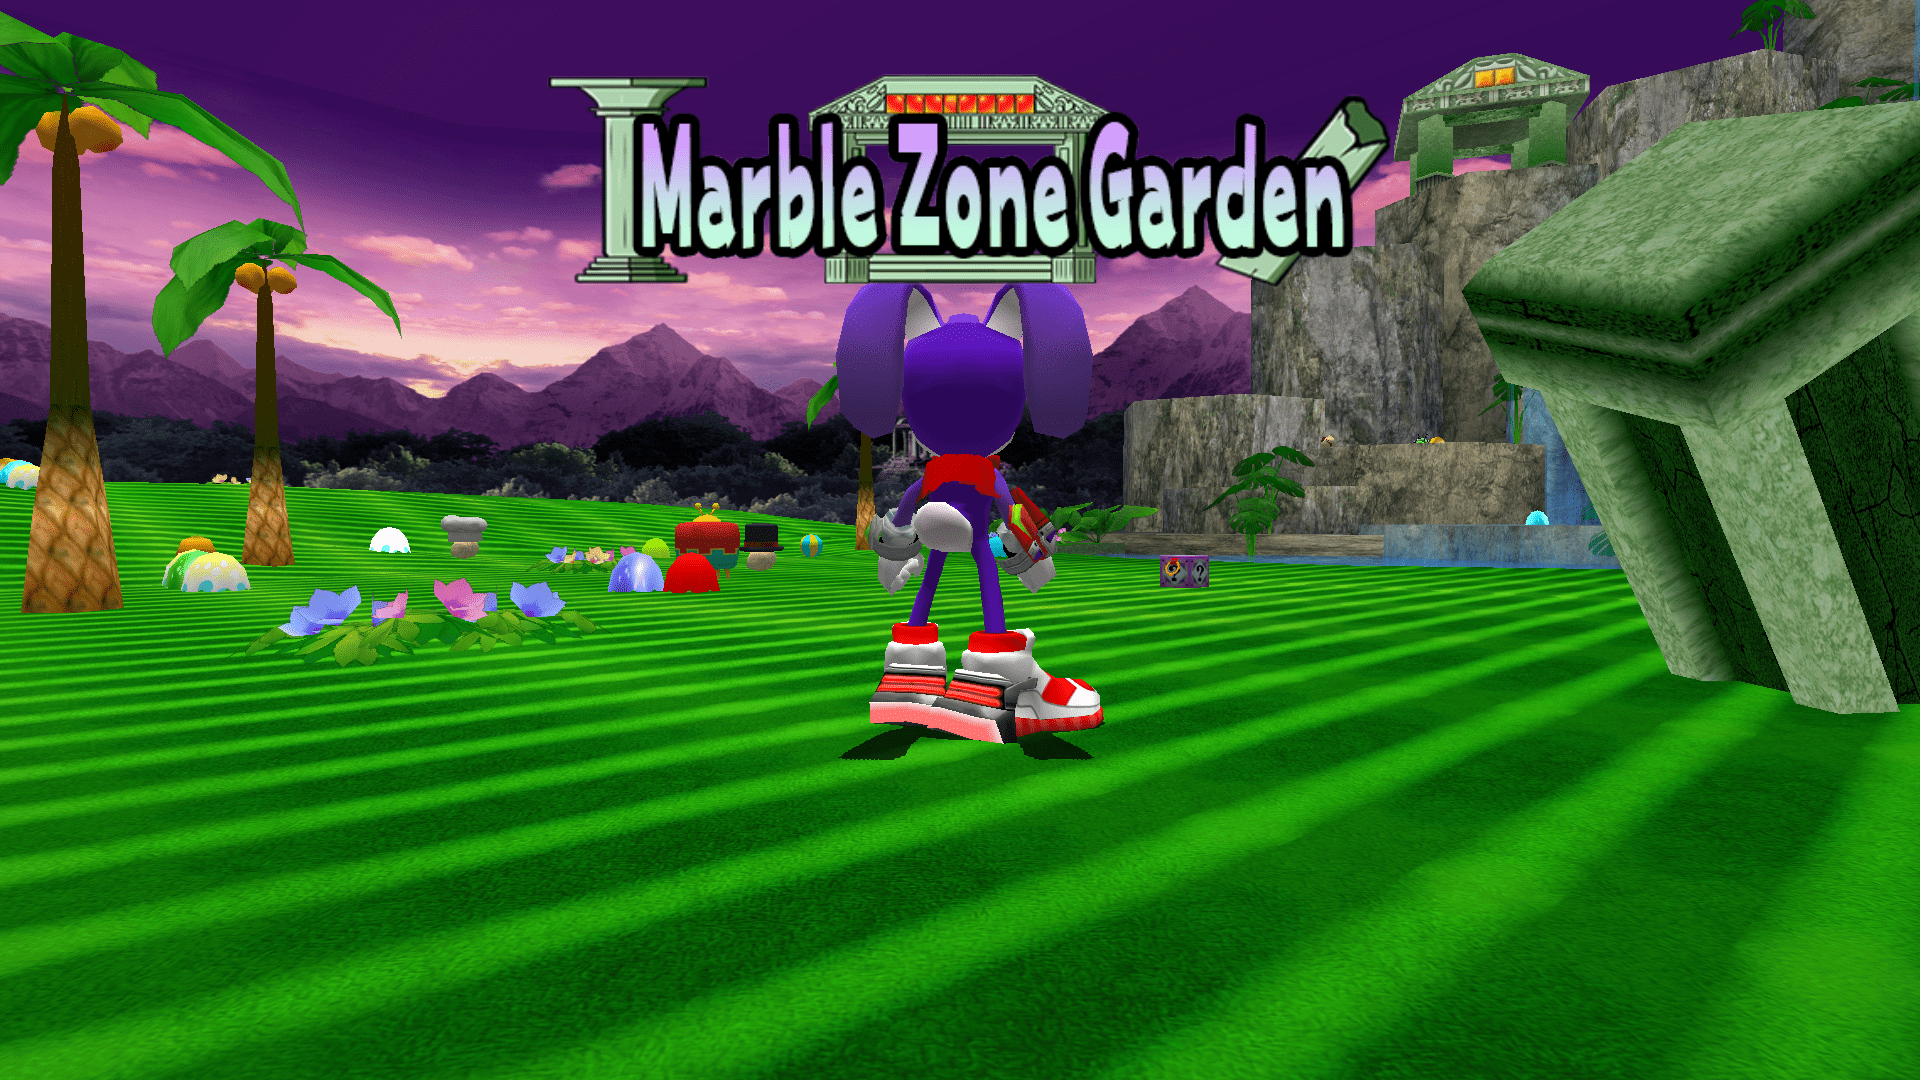 16-Bit Green Hill Zone [Sonic Adventure 2] [Mods]